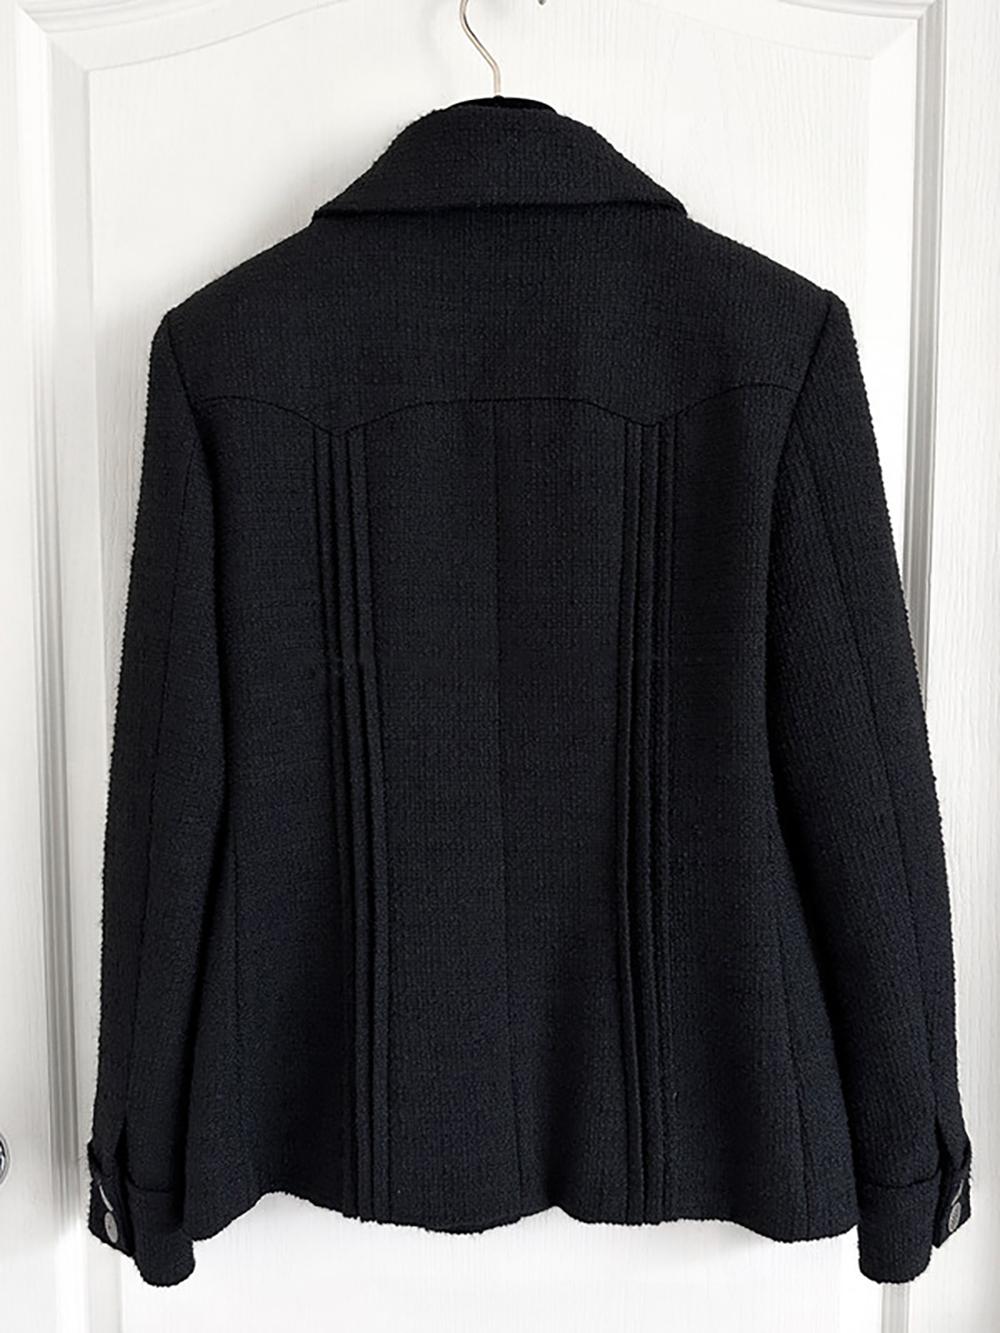 New Cuba Collection Black Tweed Jacket 5